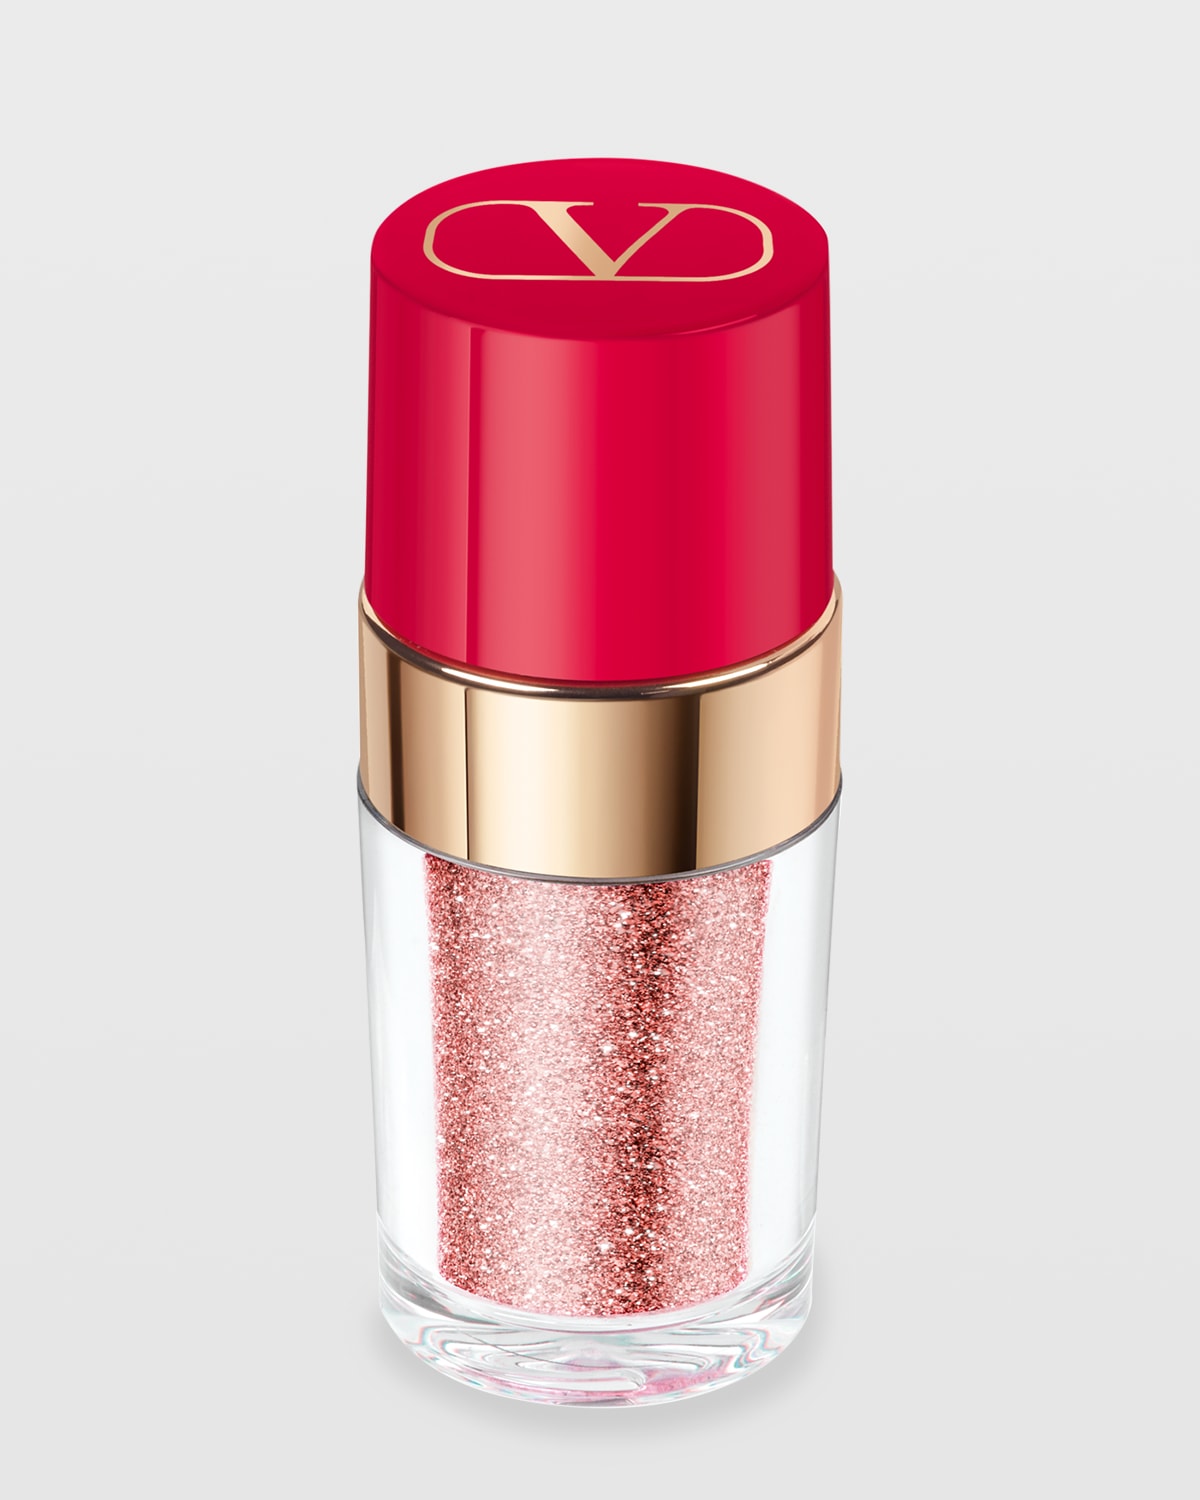 Valentino Dreamdust Lip and Cheek Loose Glitter Makeup